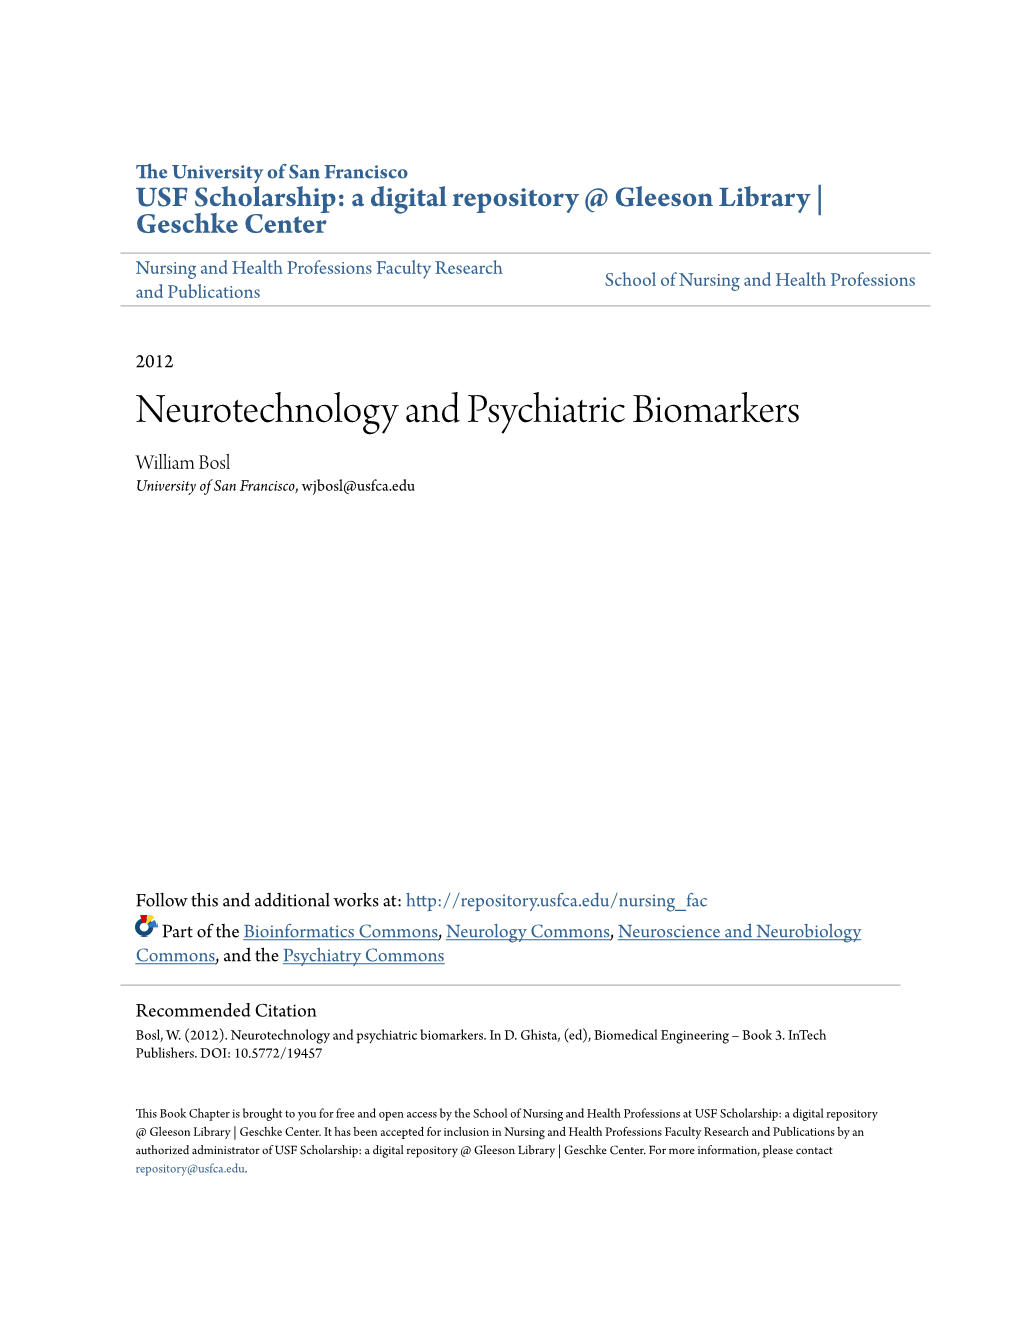 Neurotechnology and Psychiatric Biomarkers William Bosl University of San Francisco, Wjbosl@Usfca.Edu